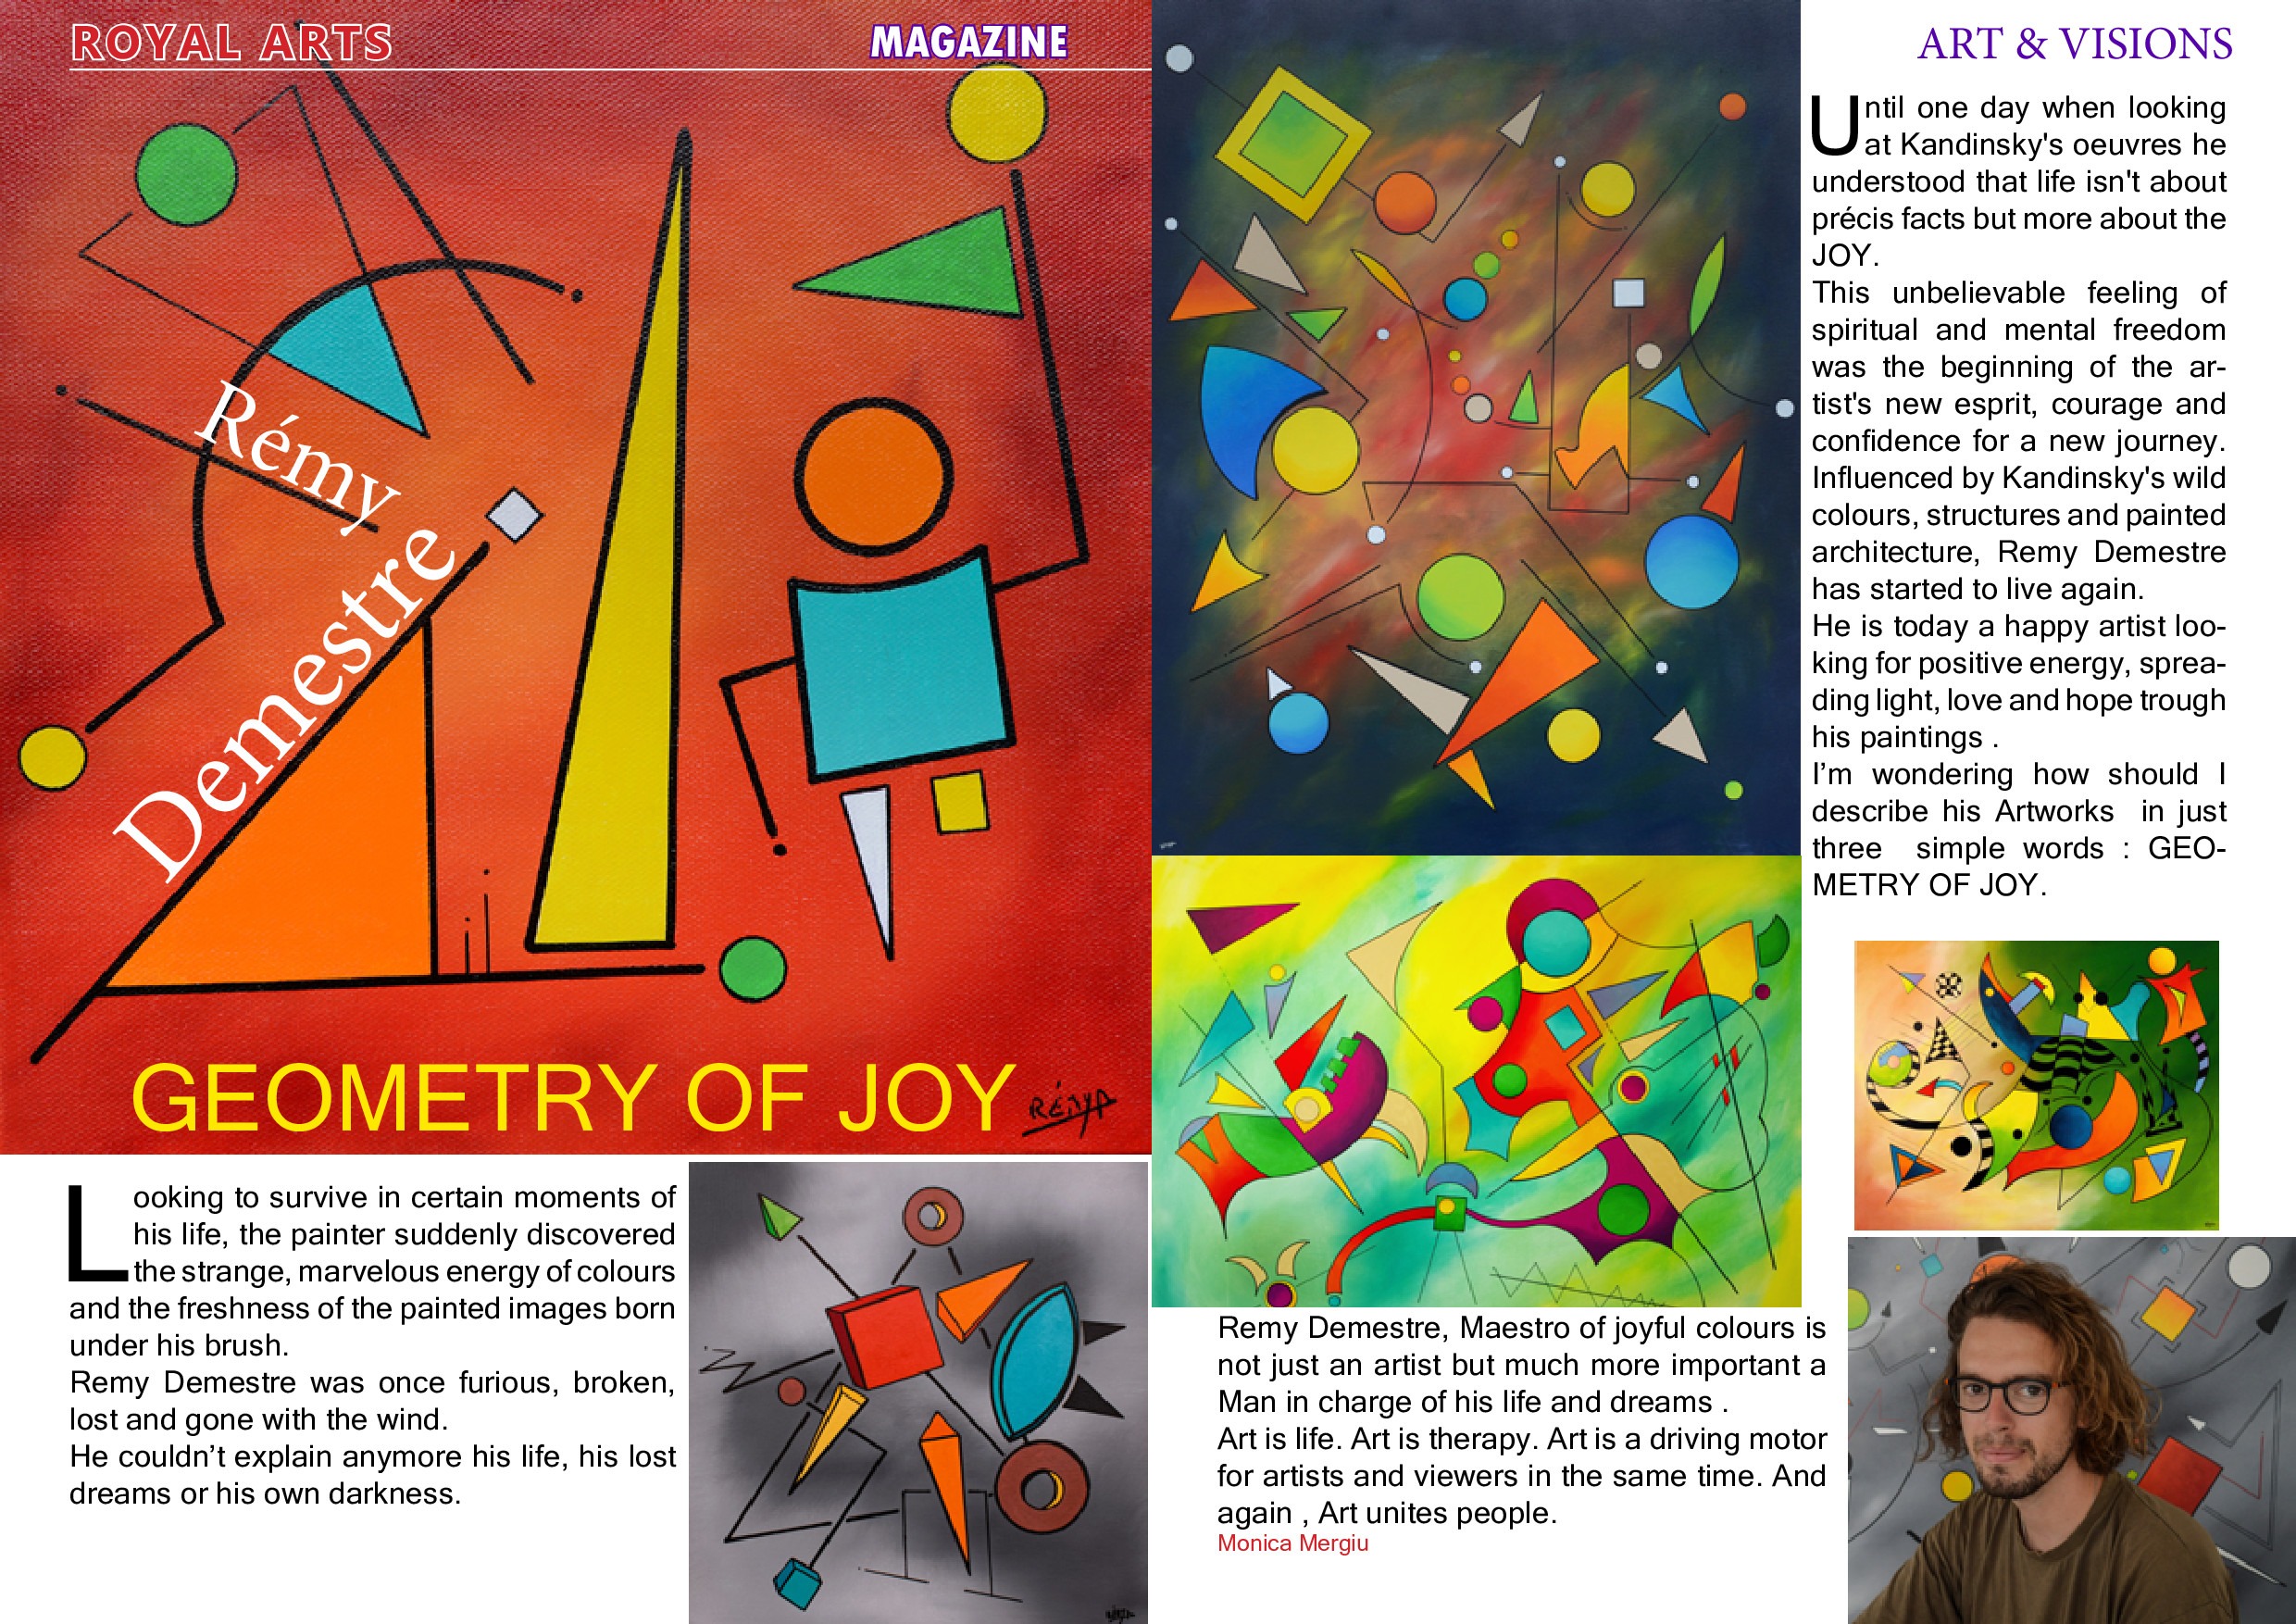 Geometry of joy